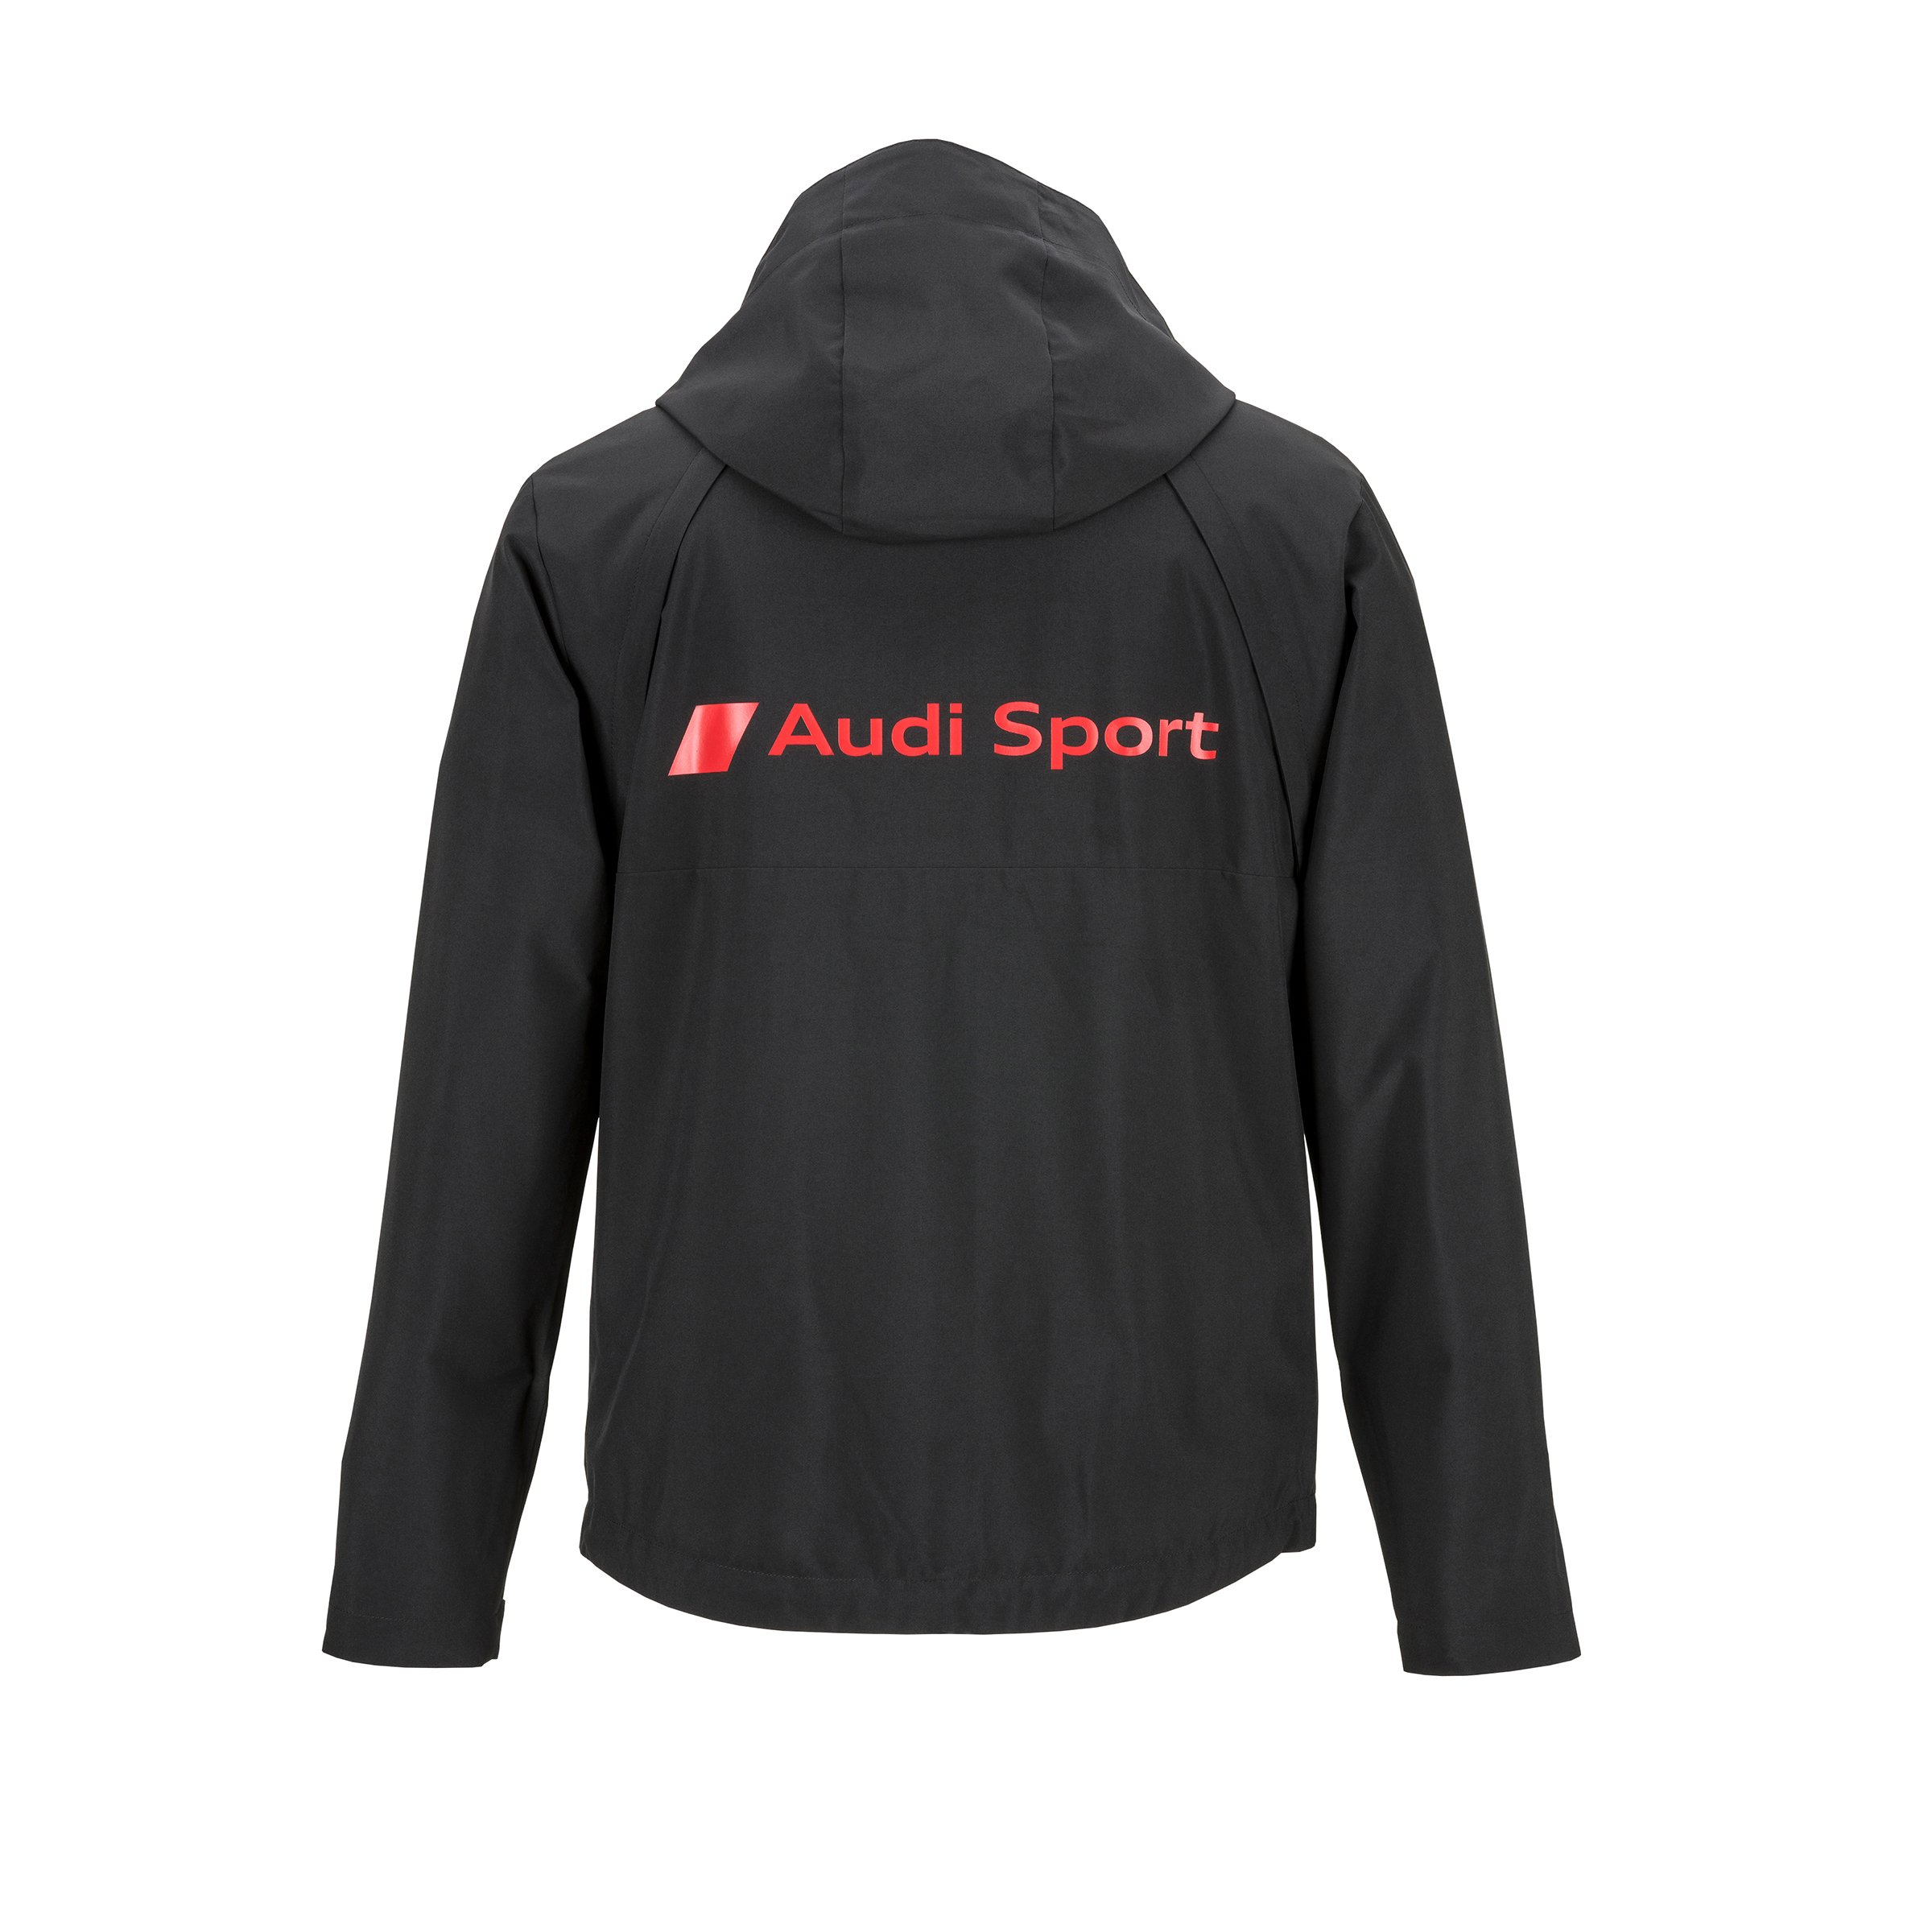 Audi Sport Zipoffjacke Herren Größe XL schwarz Jacke